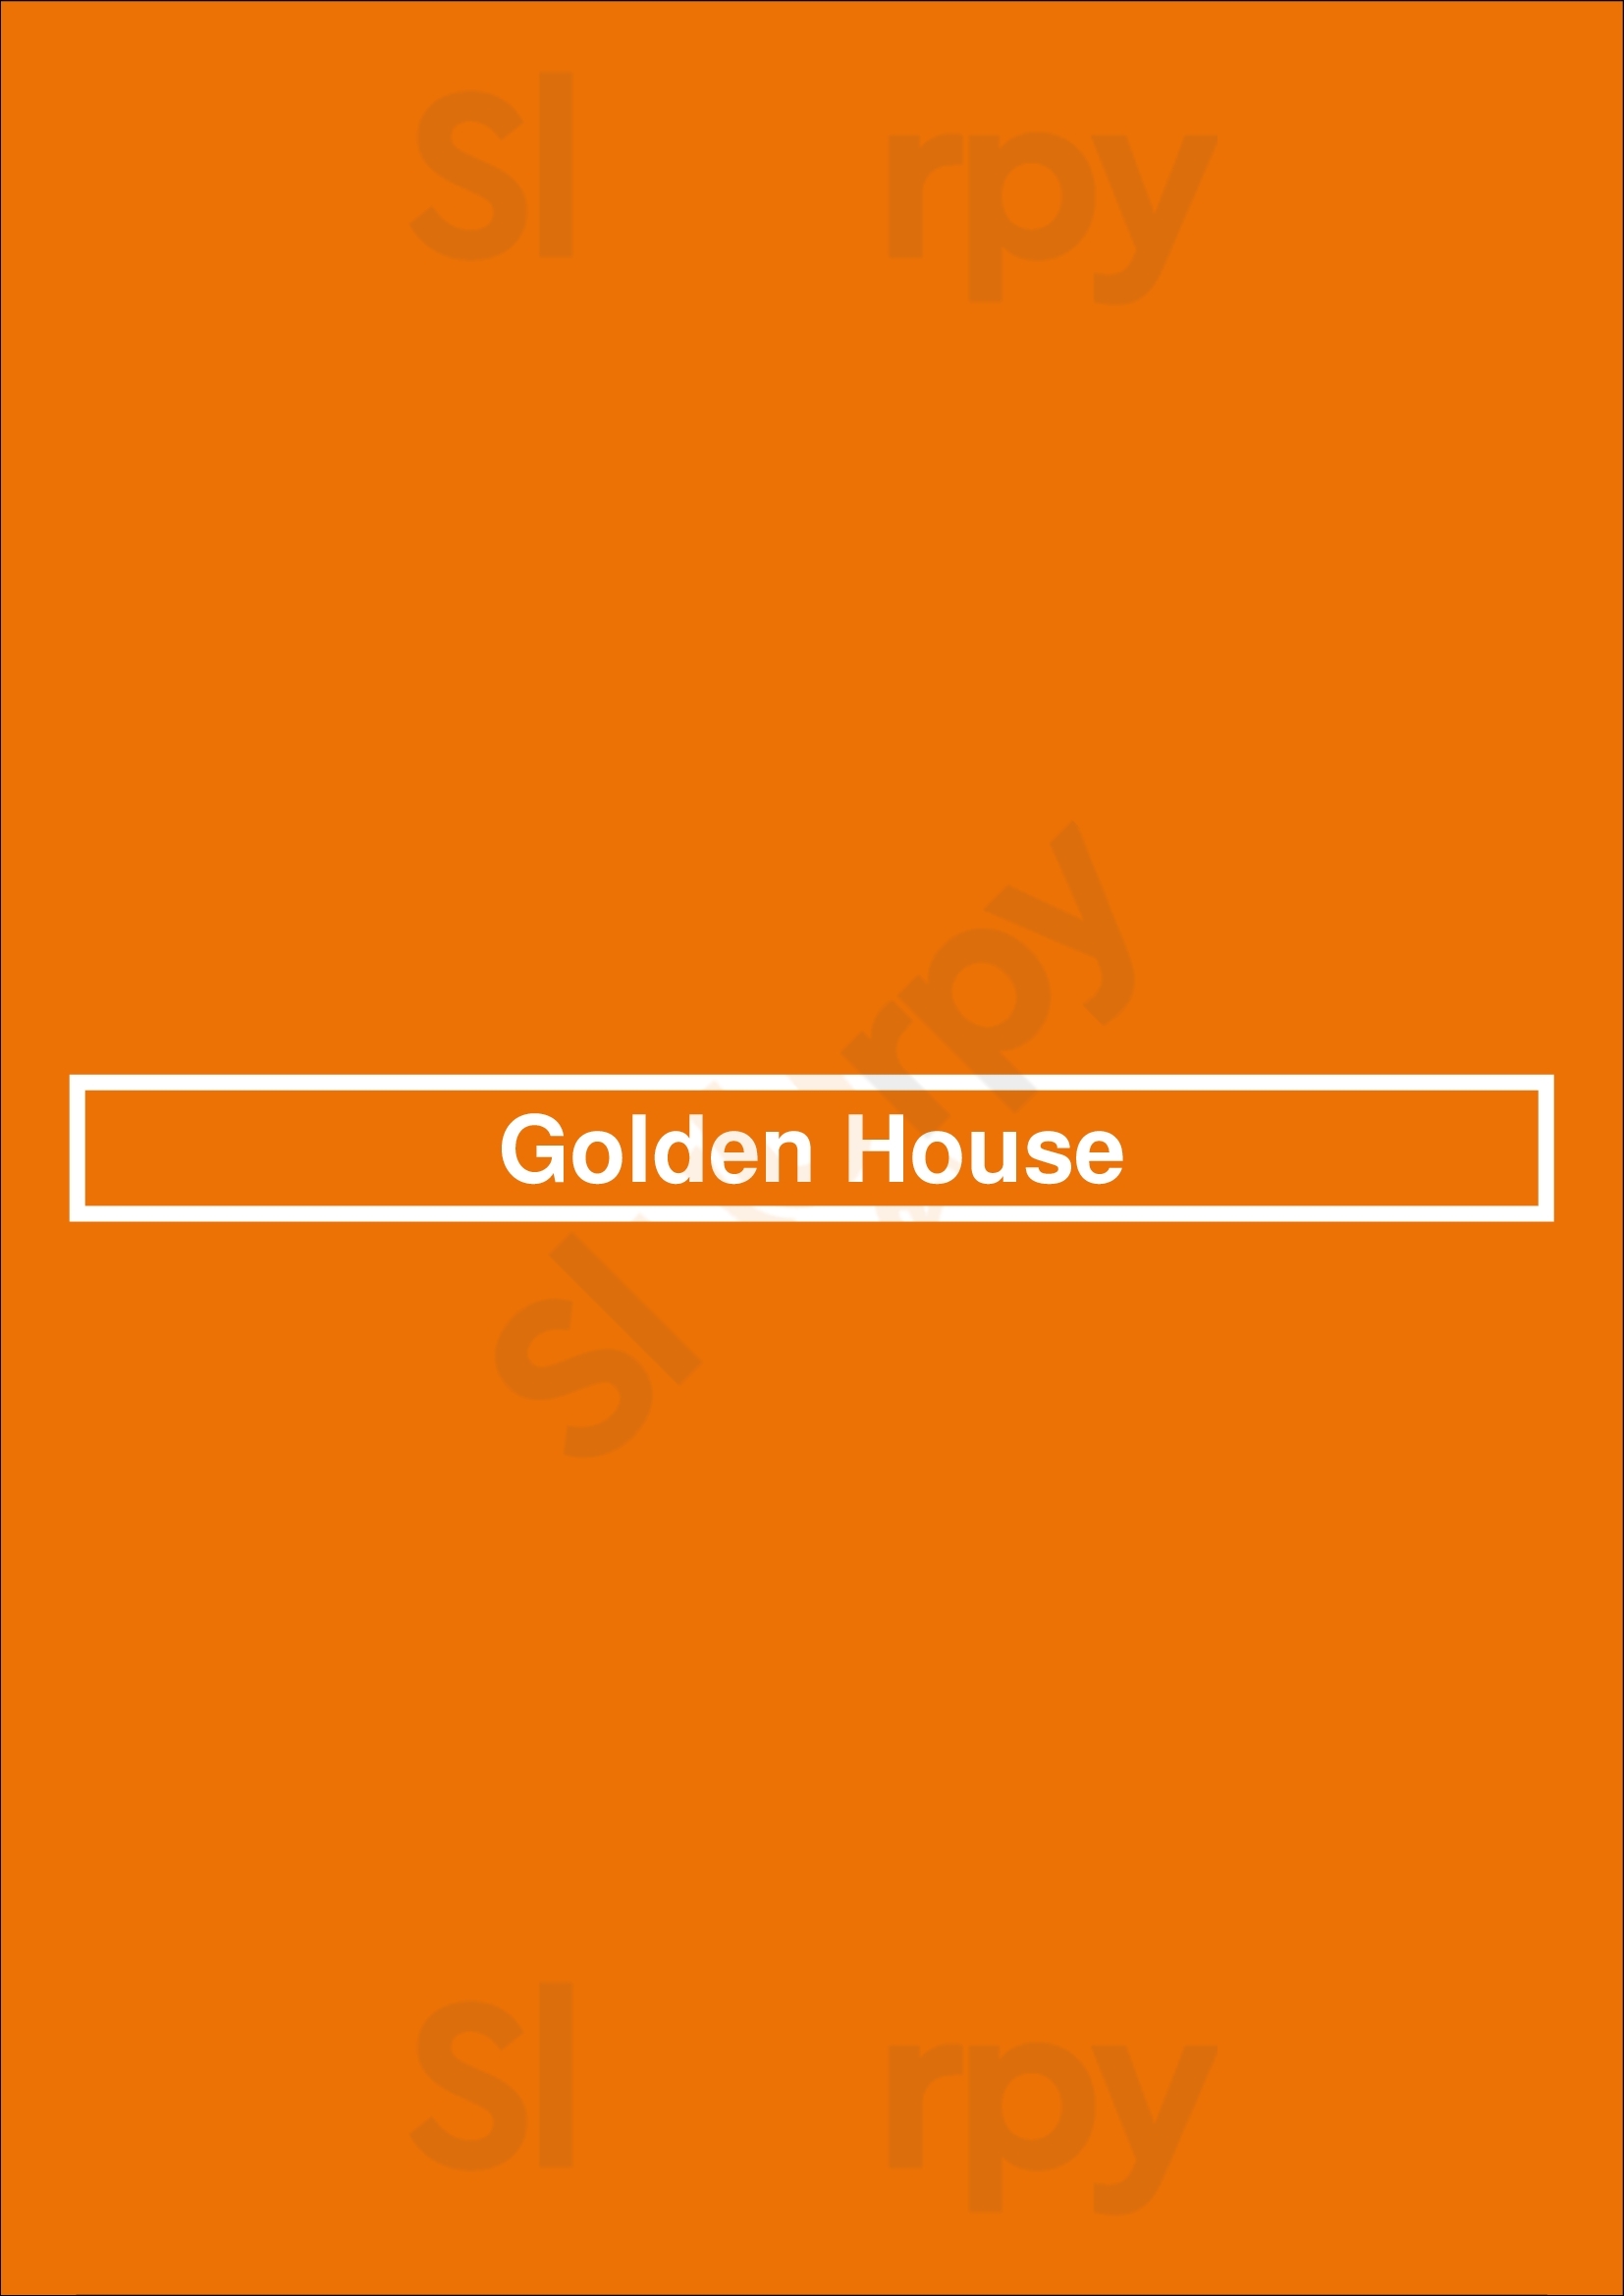 Golden House Jacksonville Menu - 1